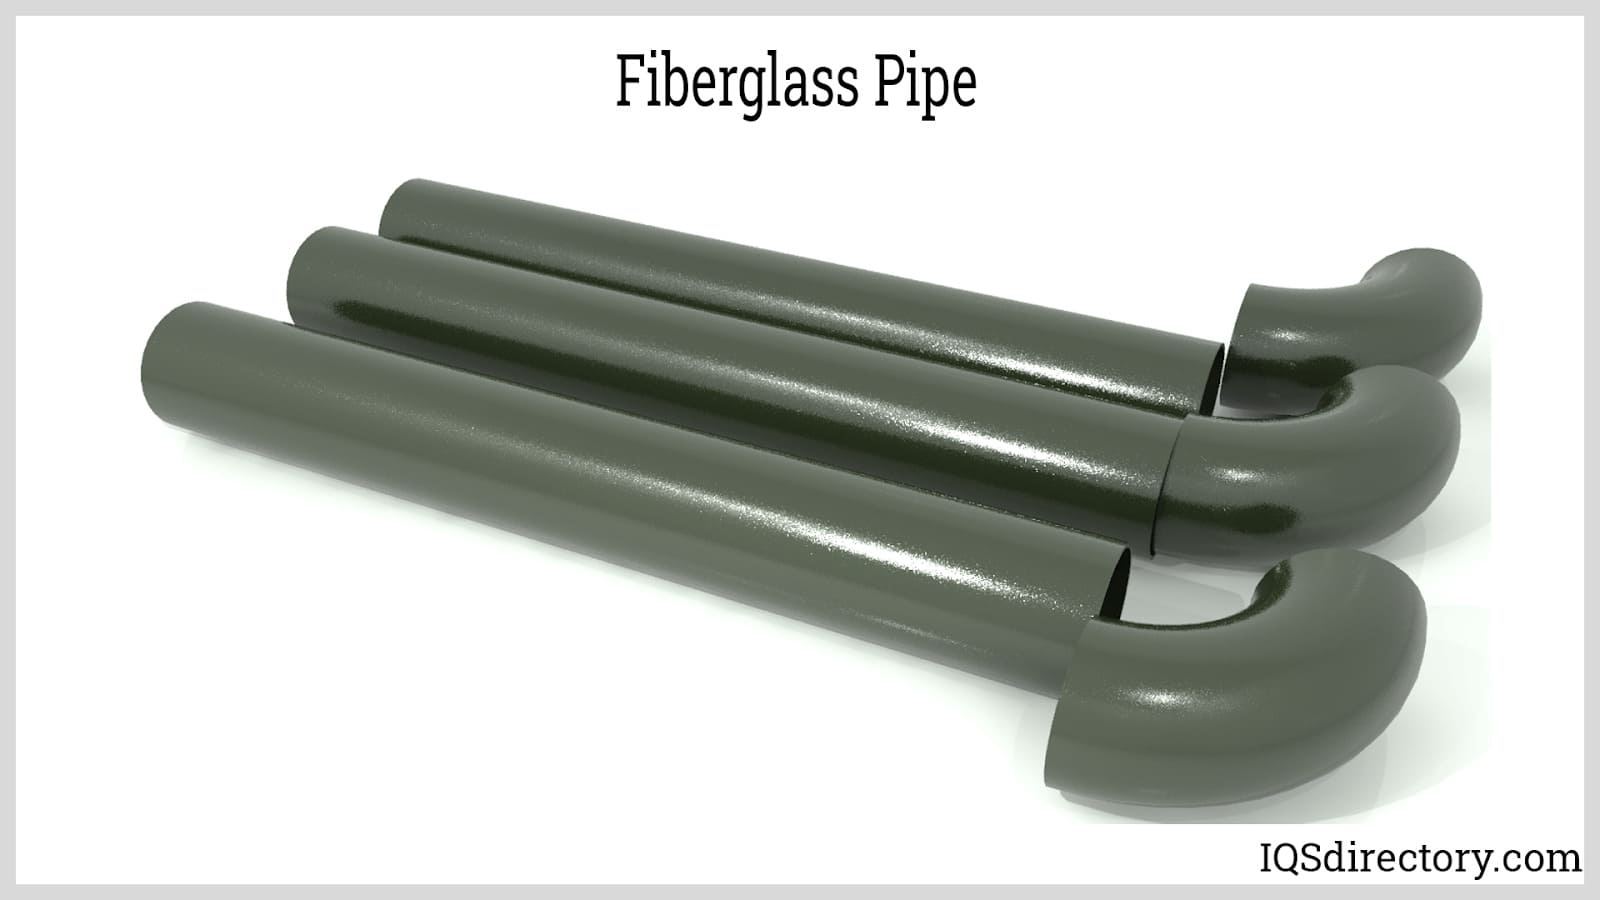 Fiberglass Pipe